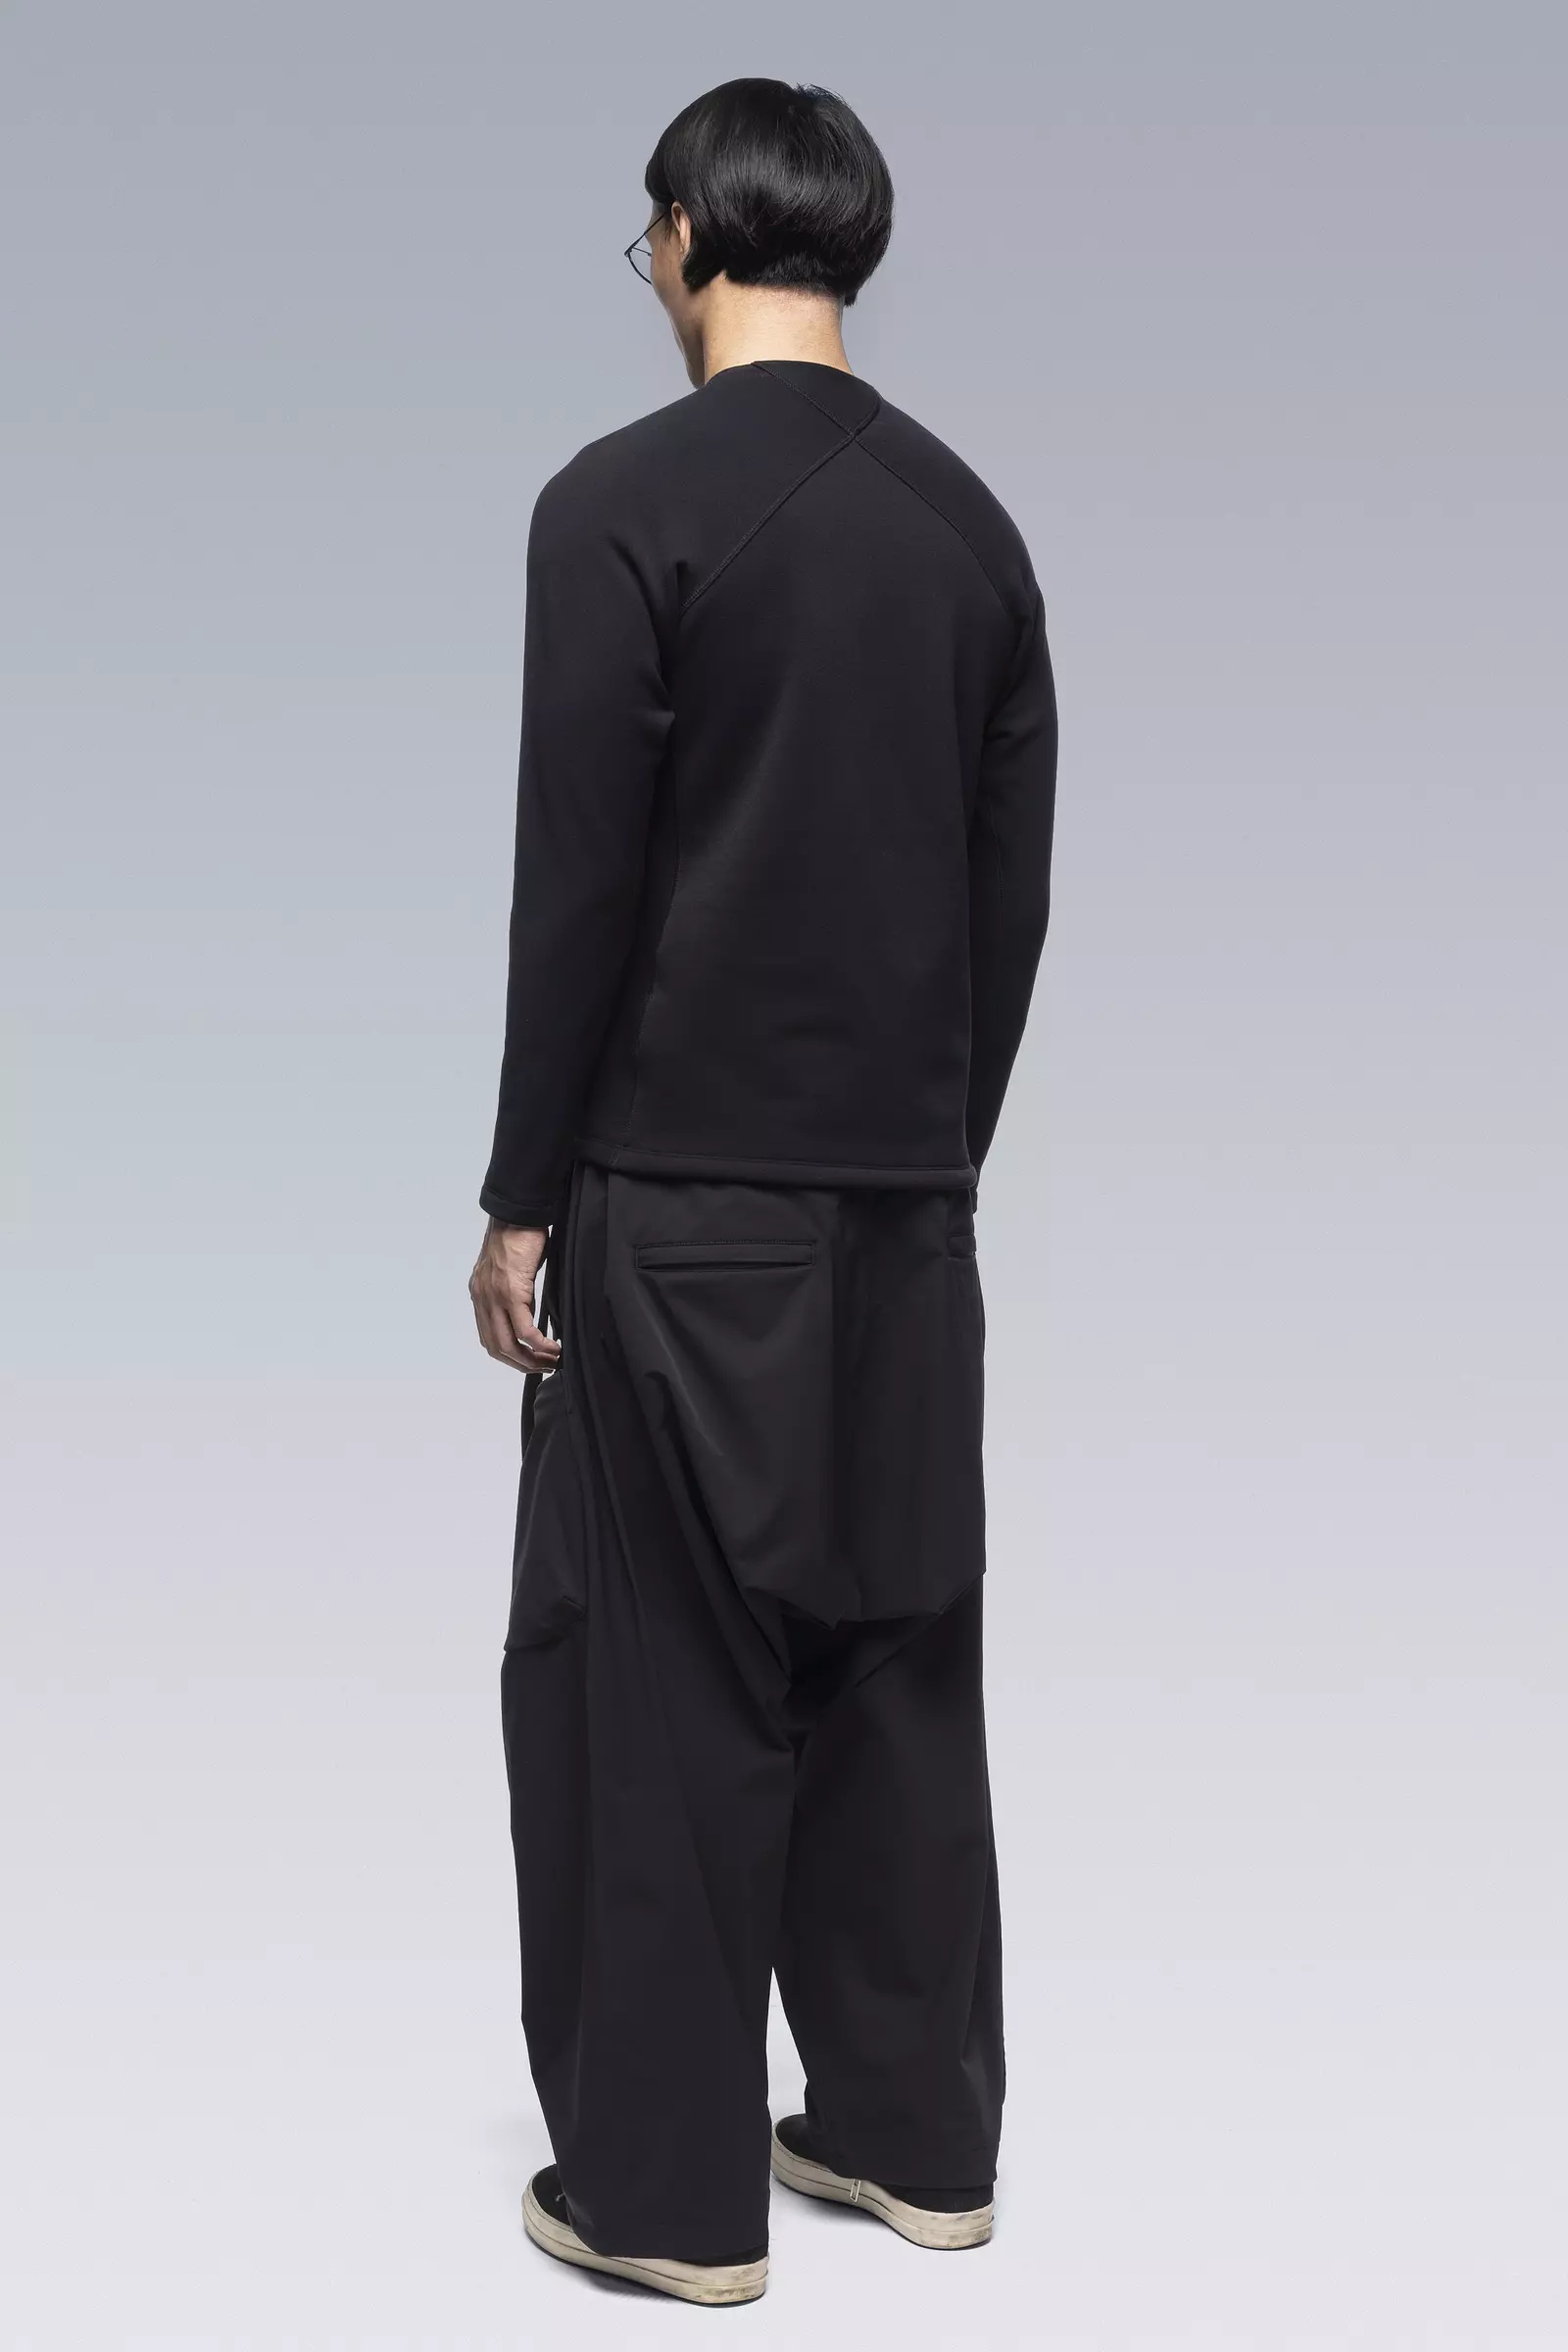 S27-PS Powerstretch® Longsleeve Shirt Black - 5